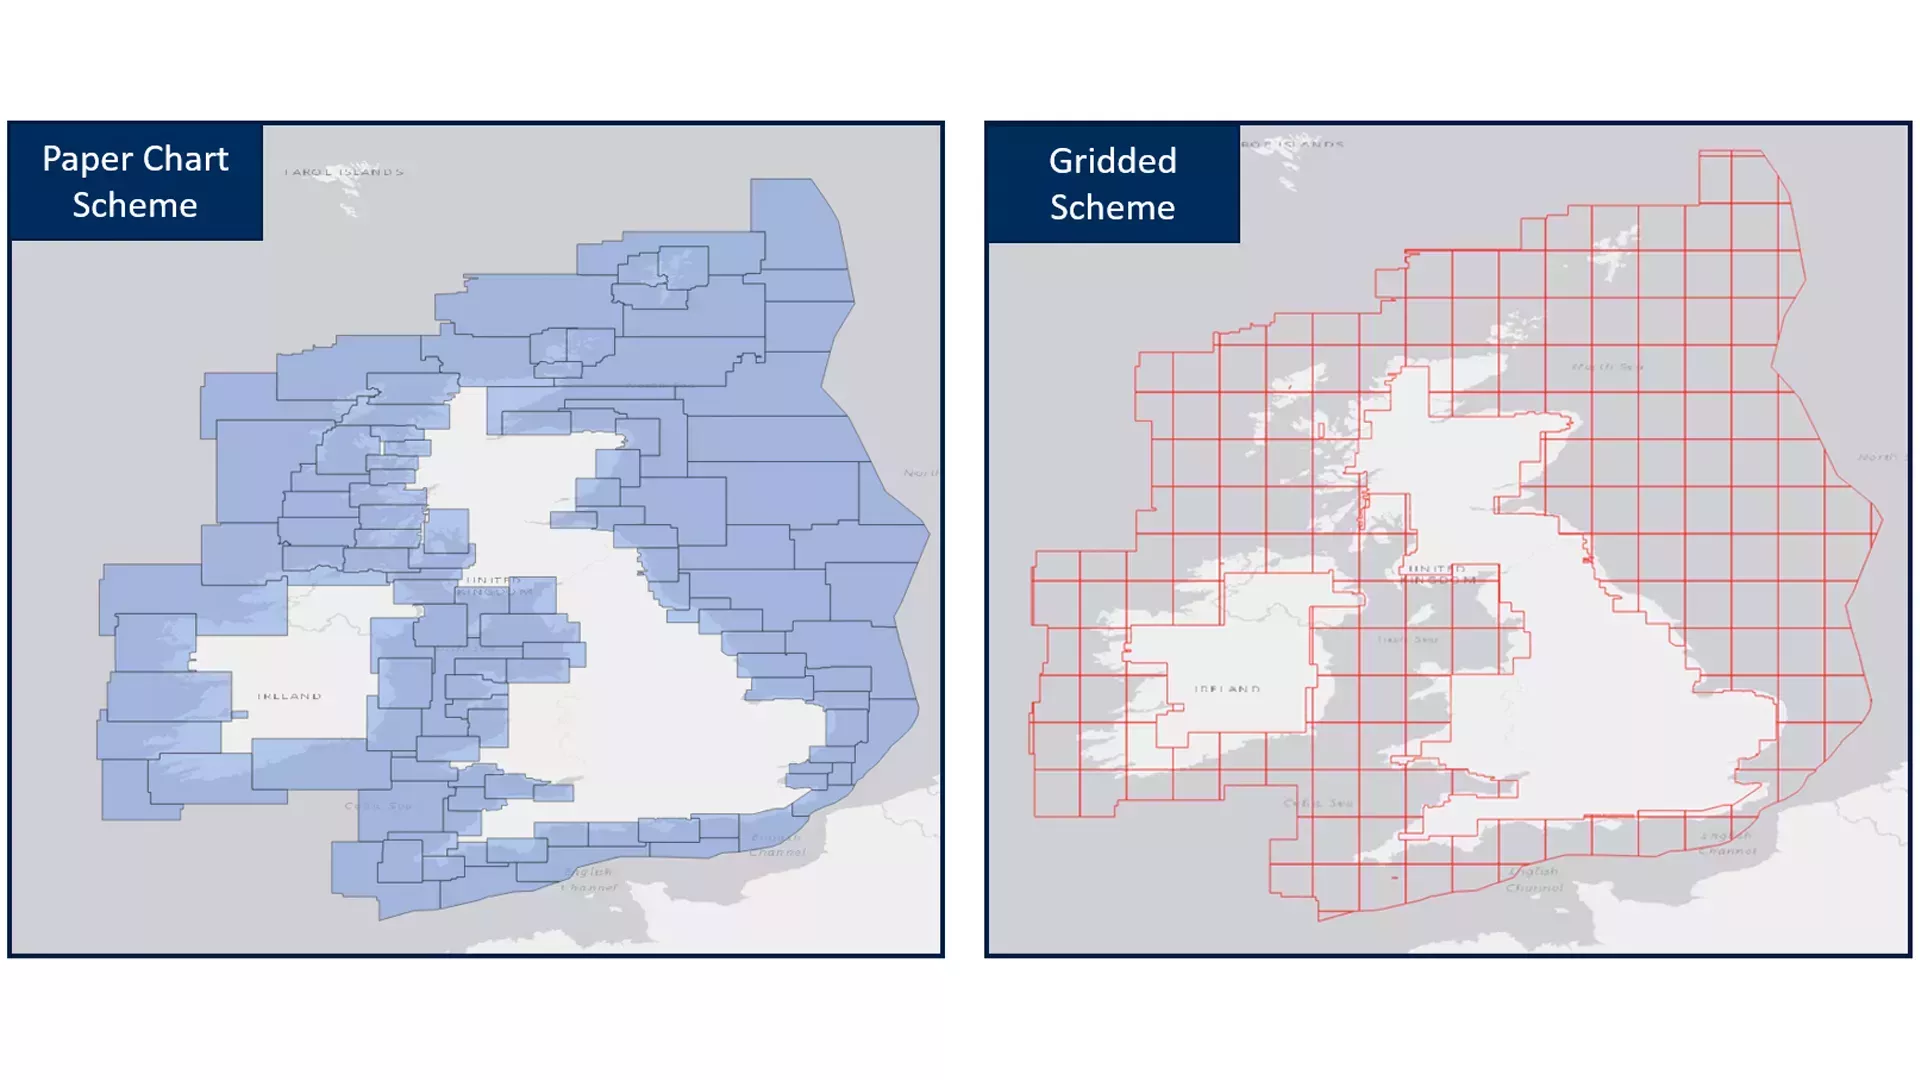 UK coastline with paper chart scheme vs gridded scheme